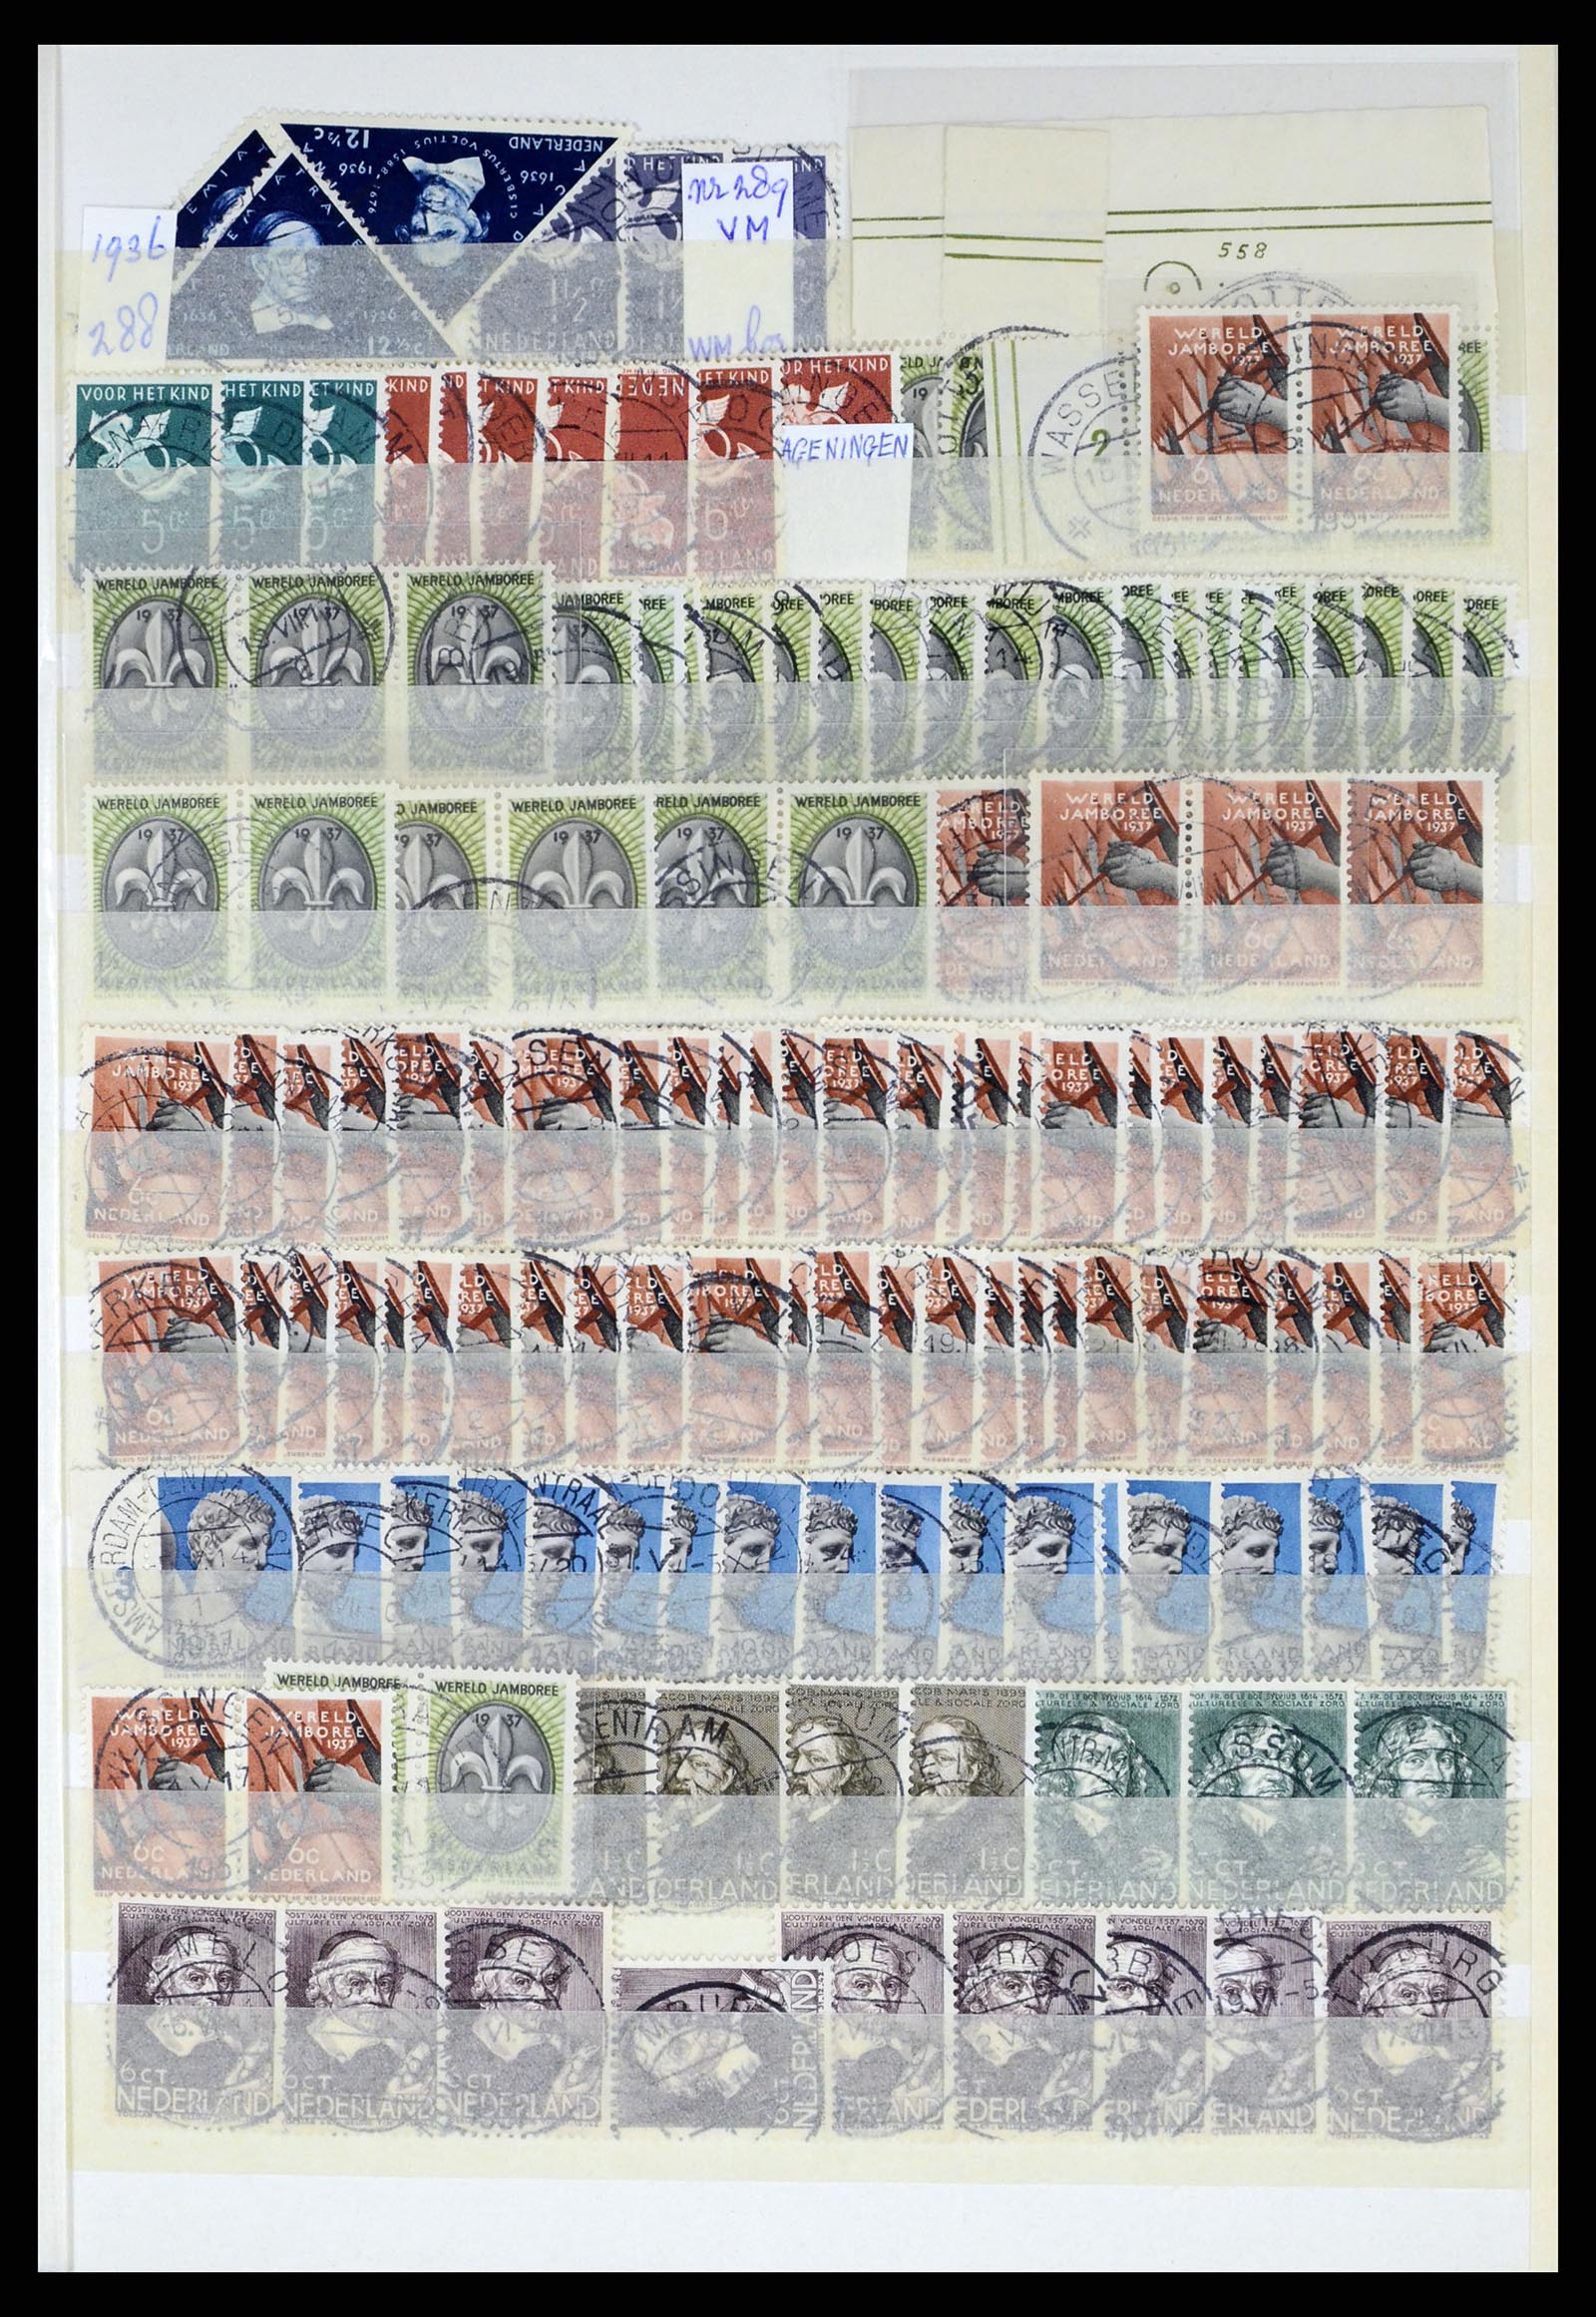 37424 021 - Stamp collection 37424 Netherlands shortbar cancels.